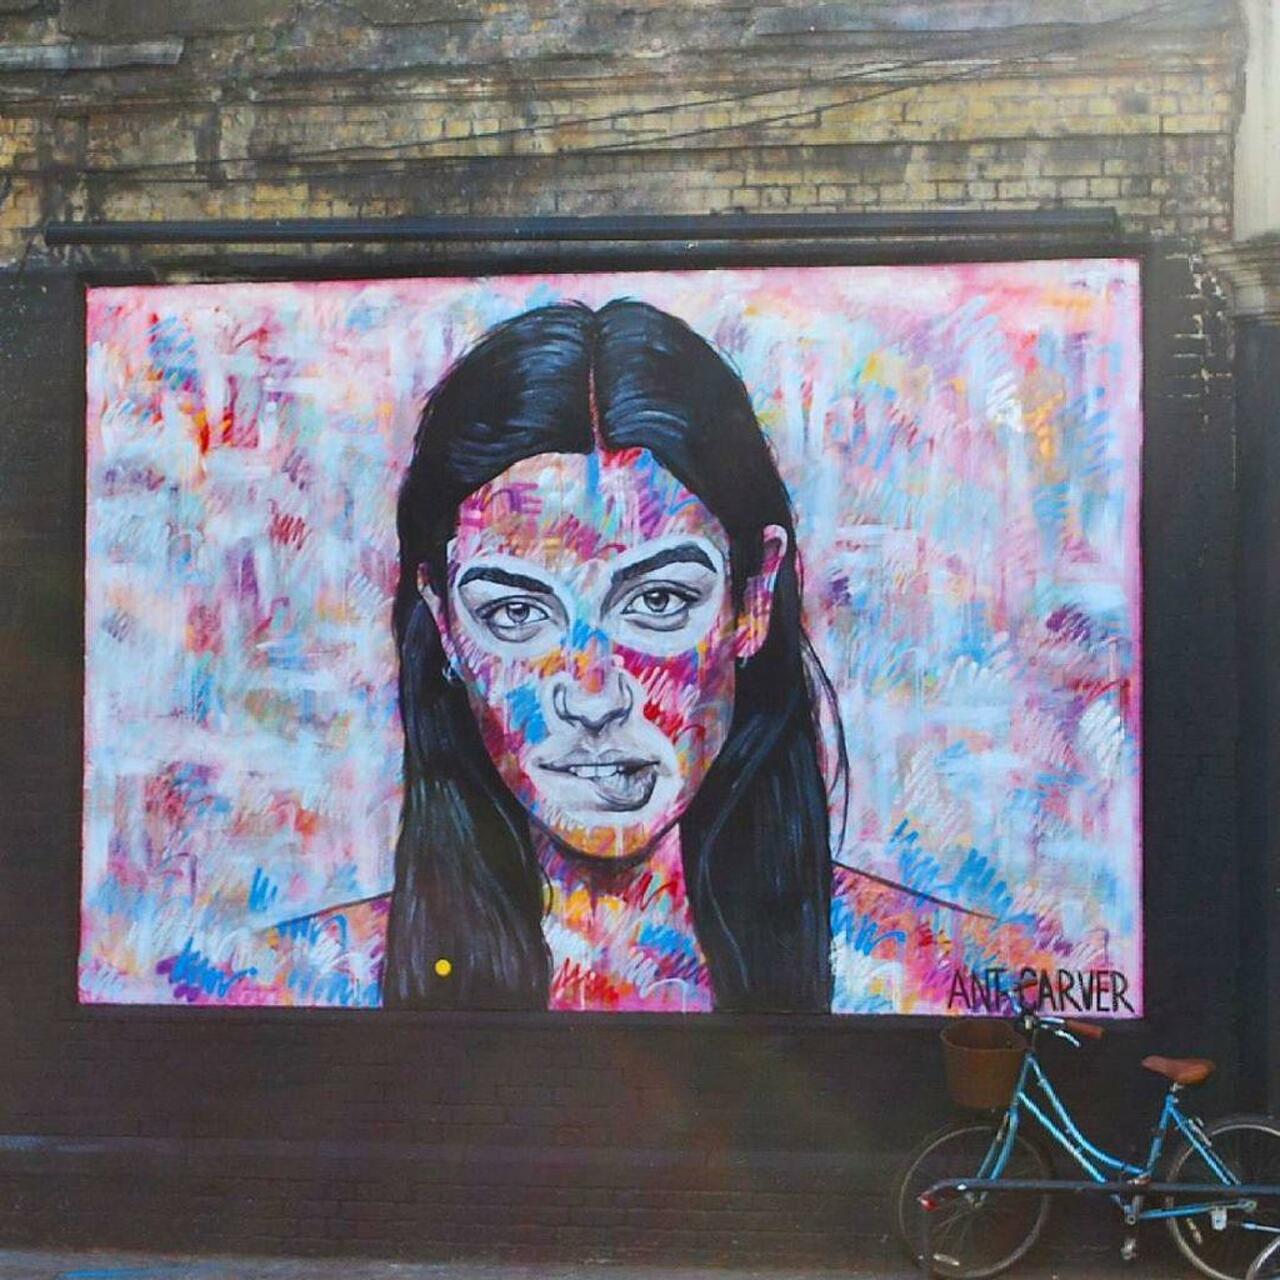 Art by Ant Carver  
#Graffiti #StreetArt #UrbanArt #AntCarver #ShoreditchCurtain #GreatEasternStreet #Shoreditch #… http://t.co/sh2Q3BuEGQ